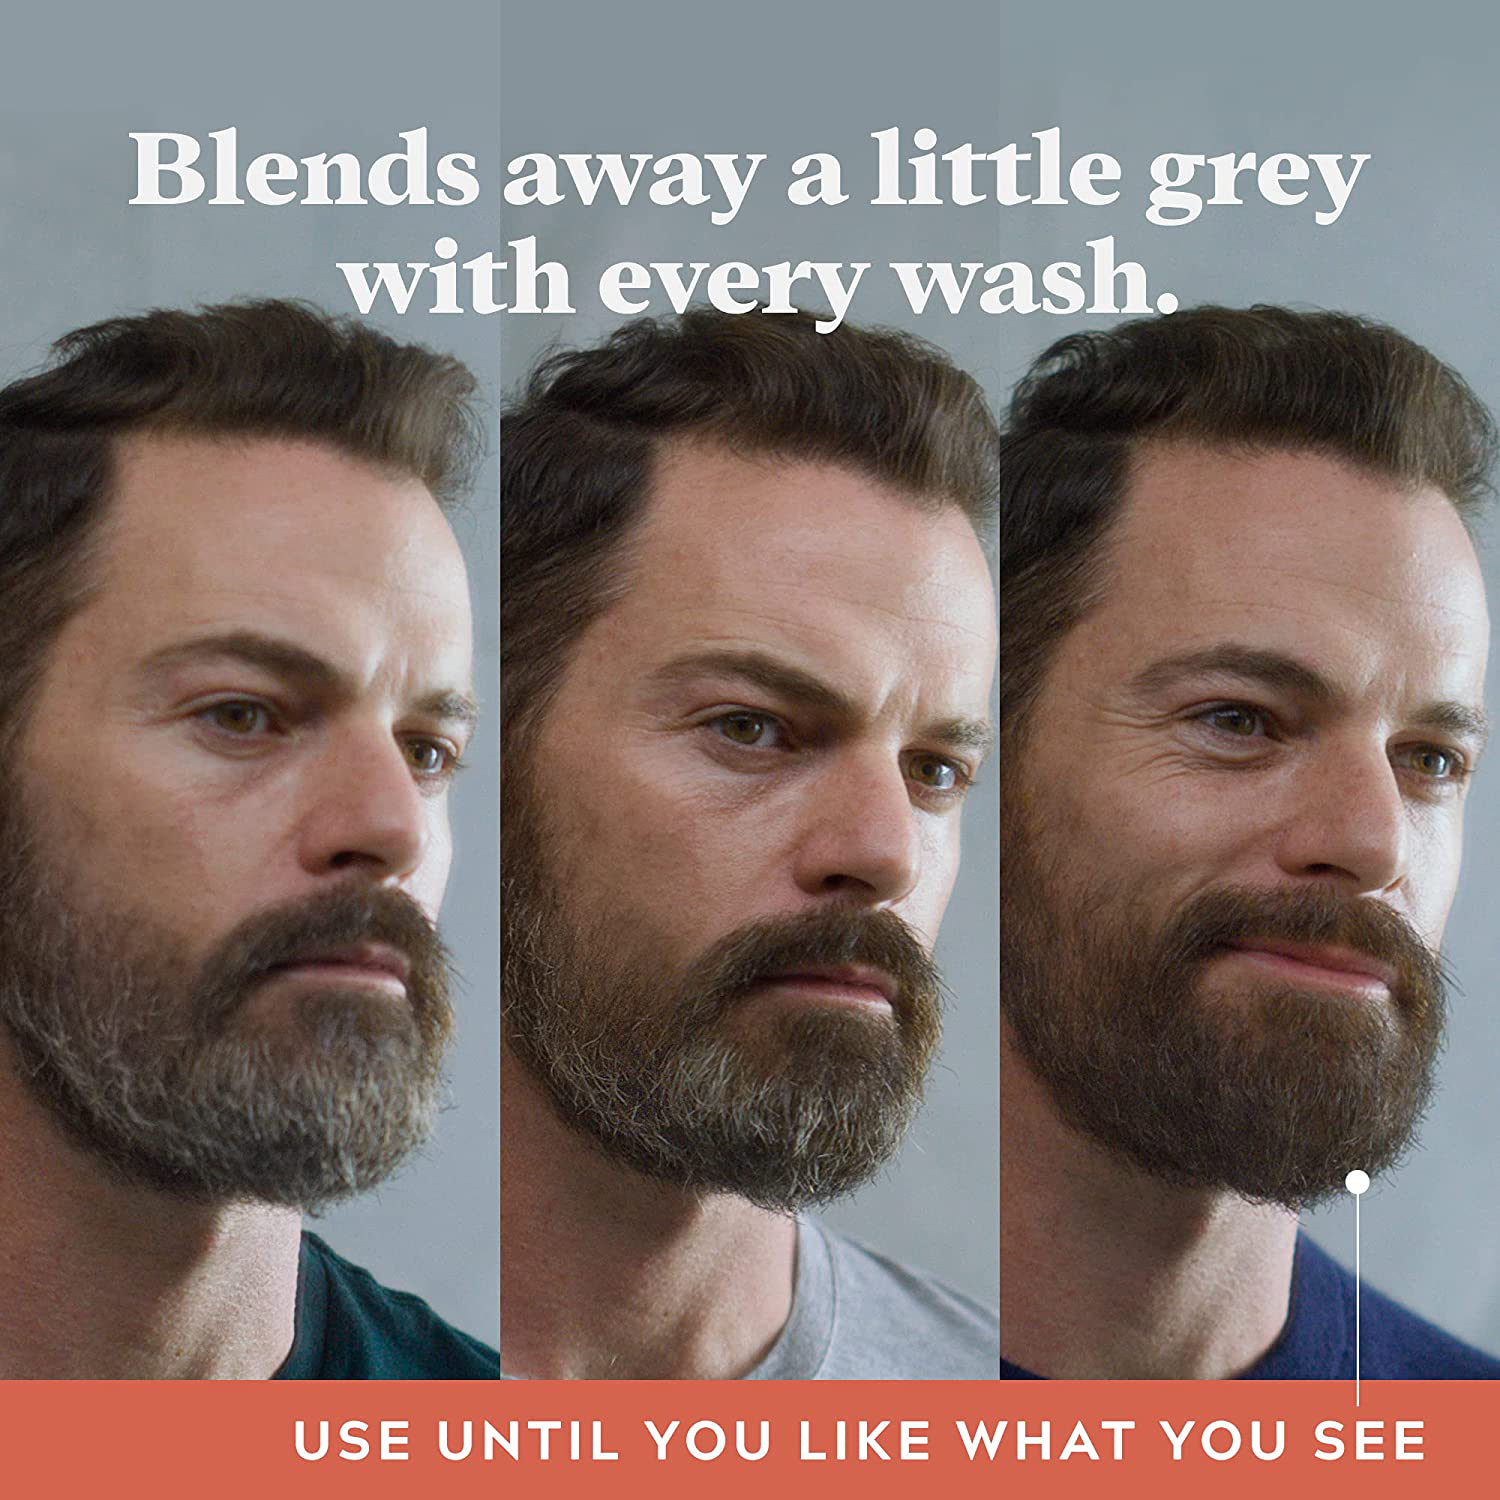 Just For Men Control GX Grey Reducing Beard Wash Shampoo, Gradually Colors Mustache and Beard, Leaves Facial Hair Softer and Fuller